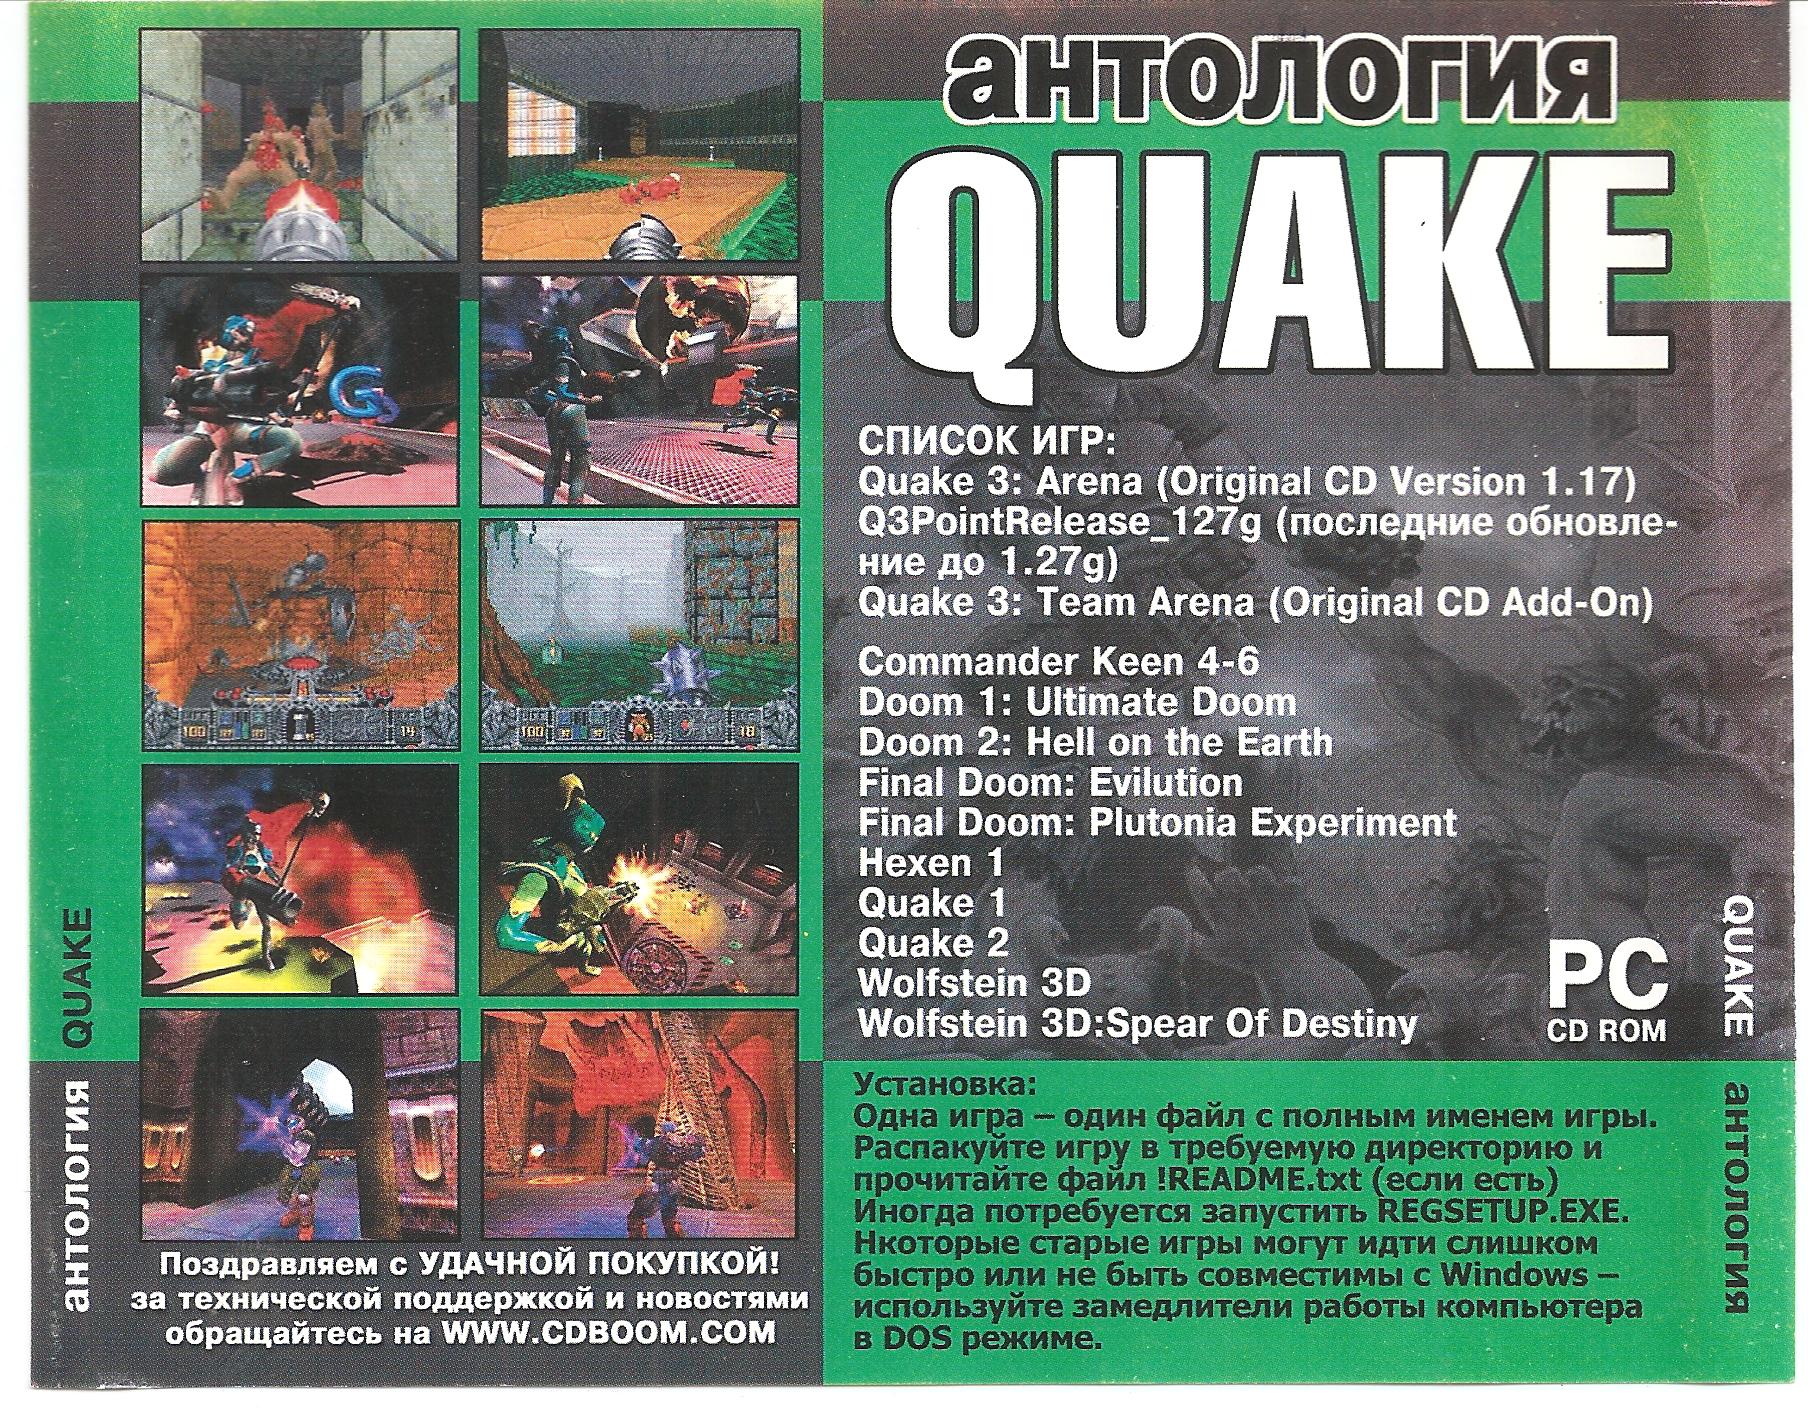 Антология перевод. Quake антология. Quake антология диск. Антология Quake DVD. DVD Box - антология Quake.